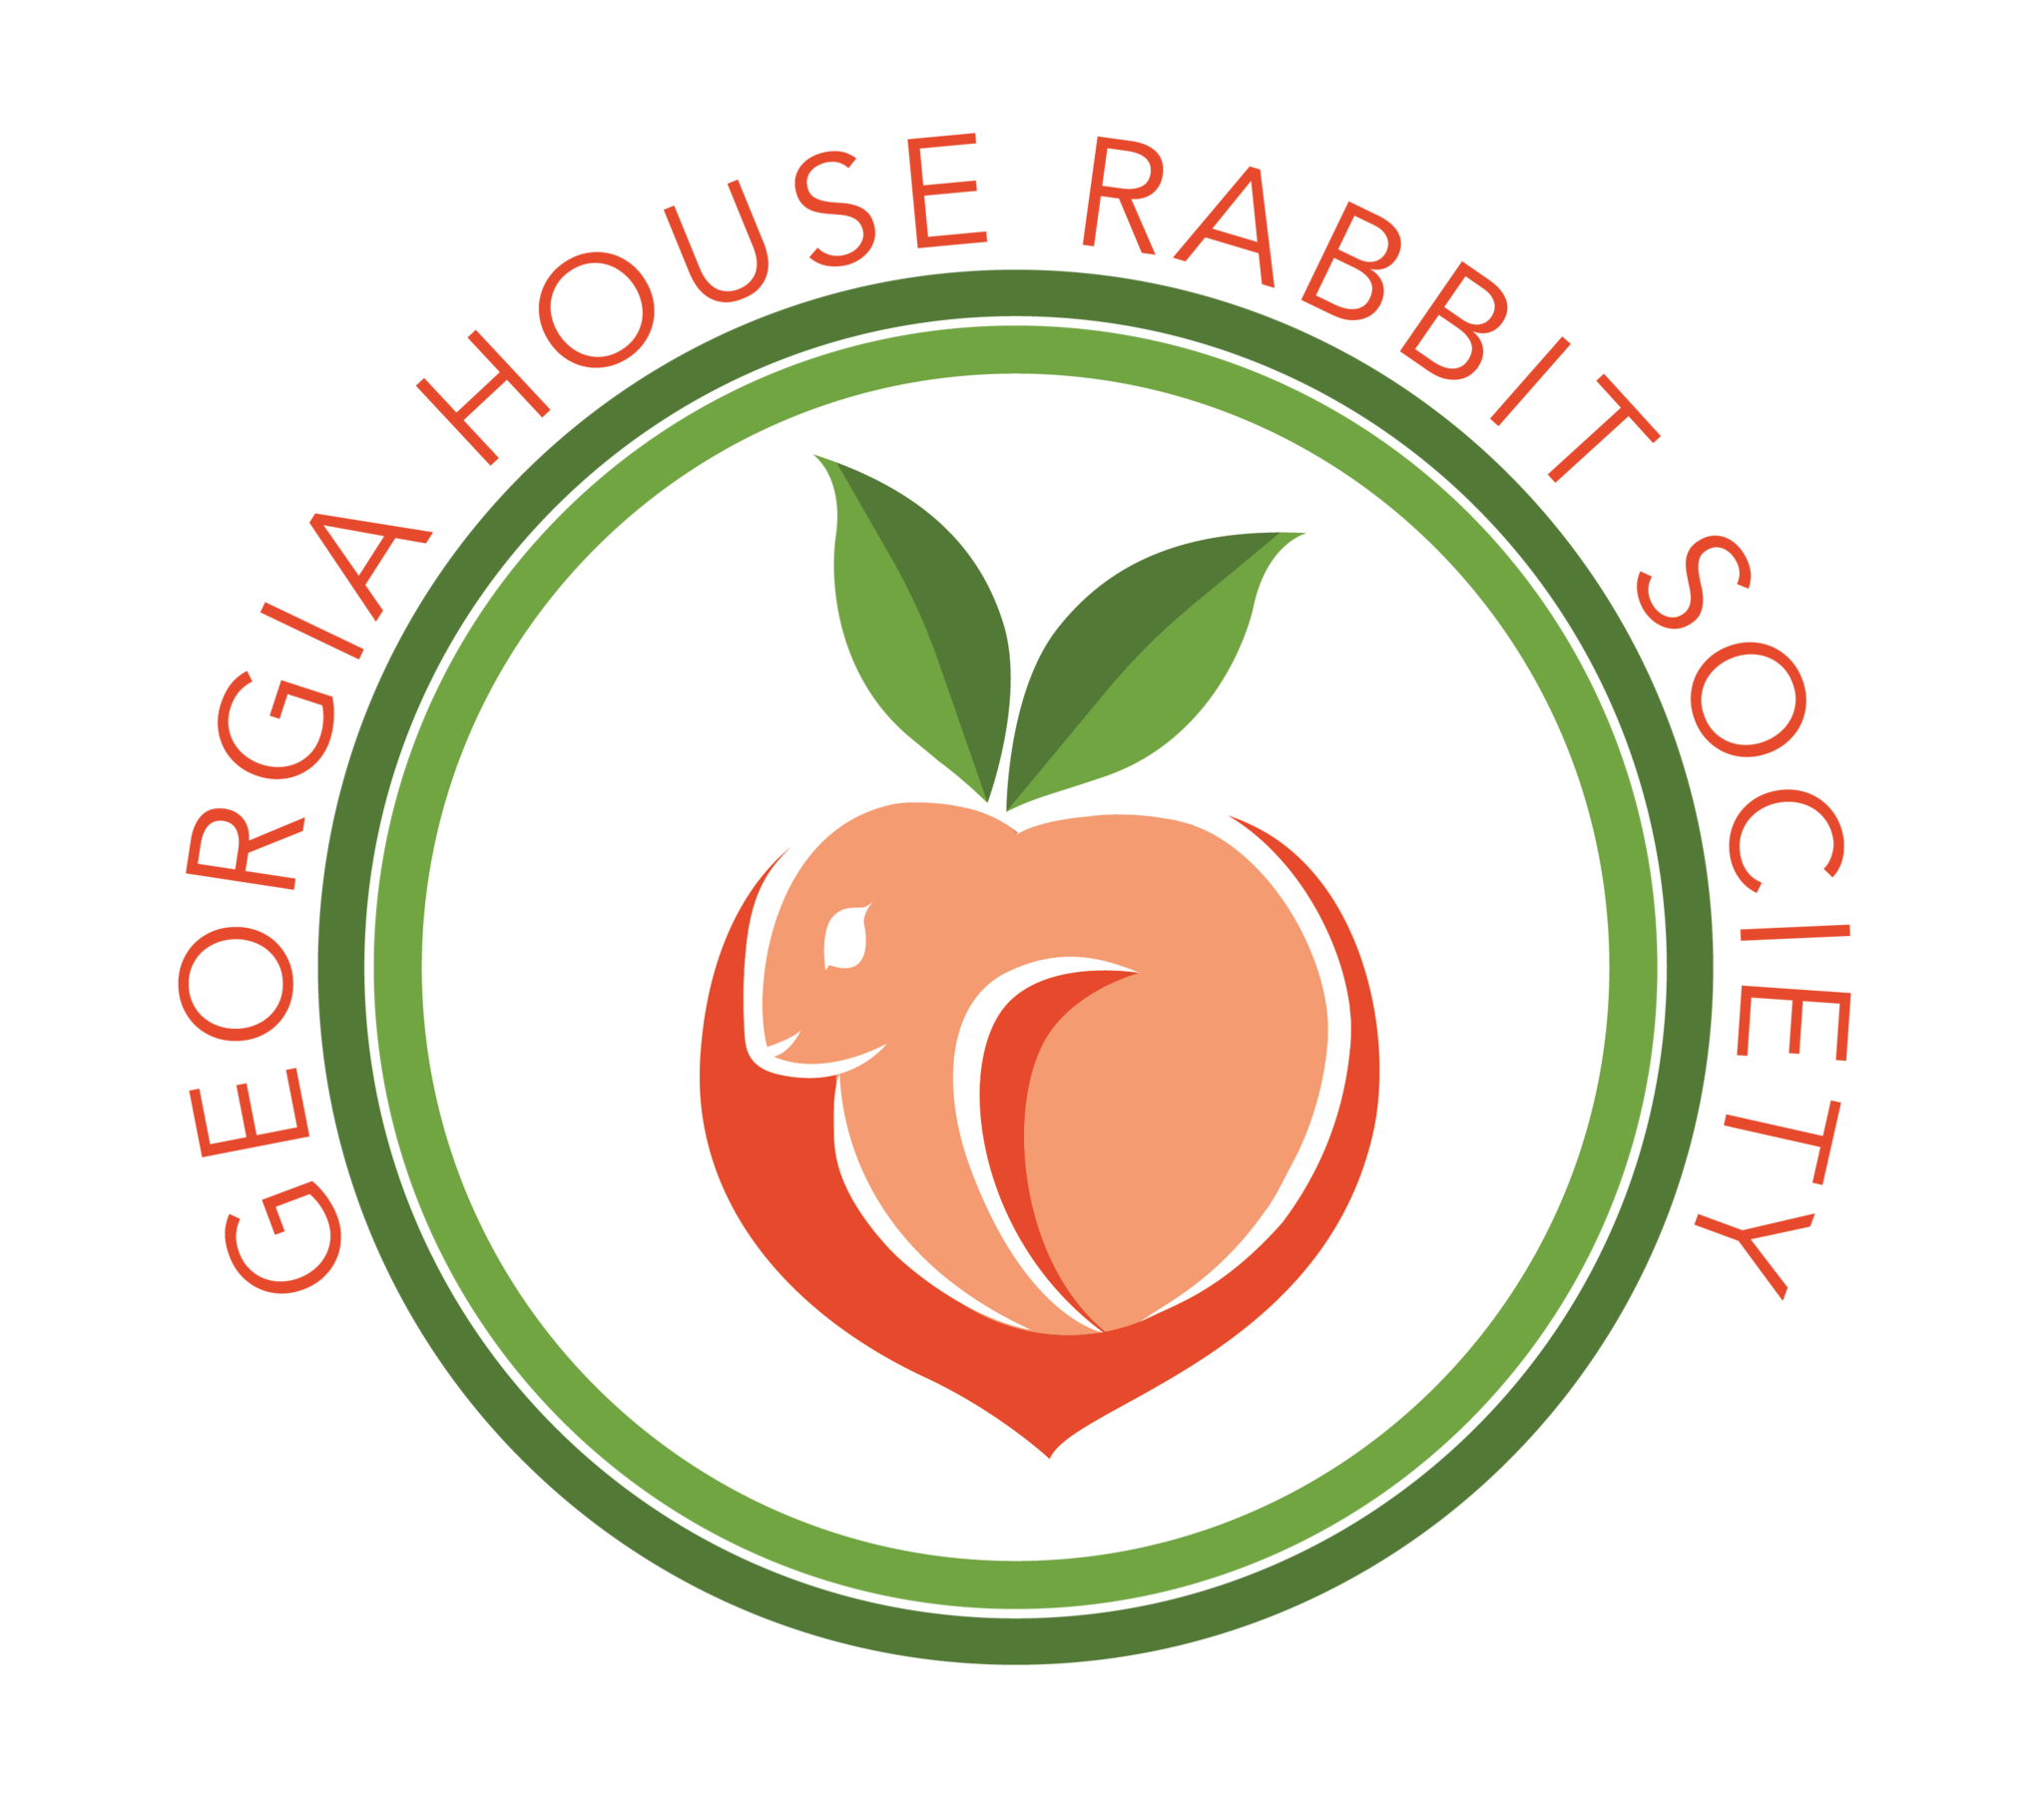 Georgia House Rabbit Society